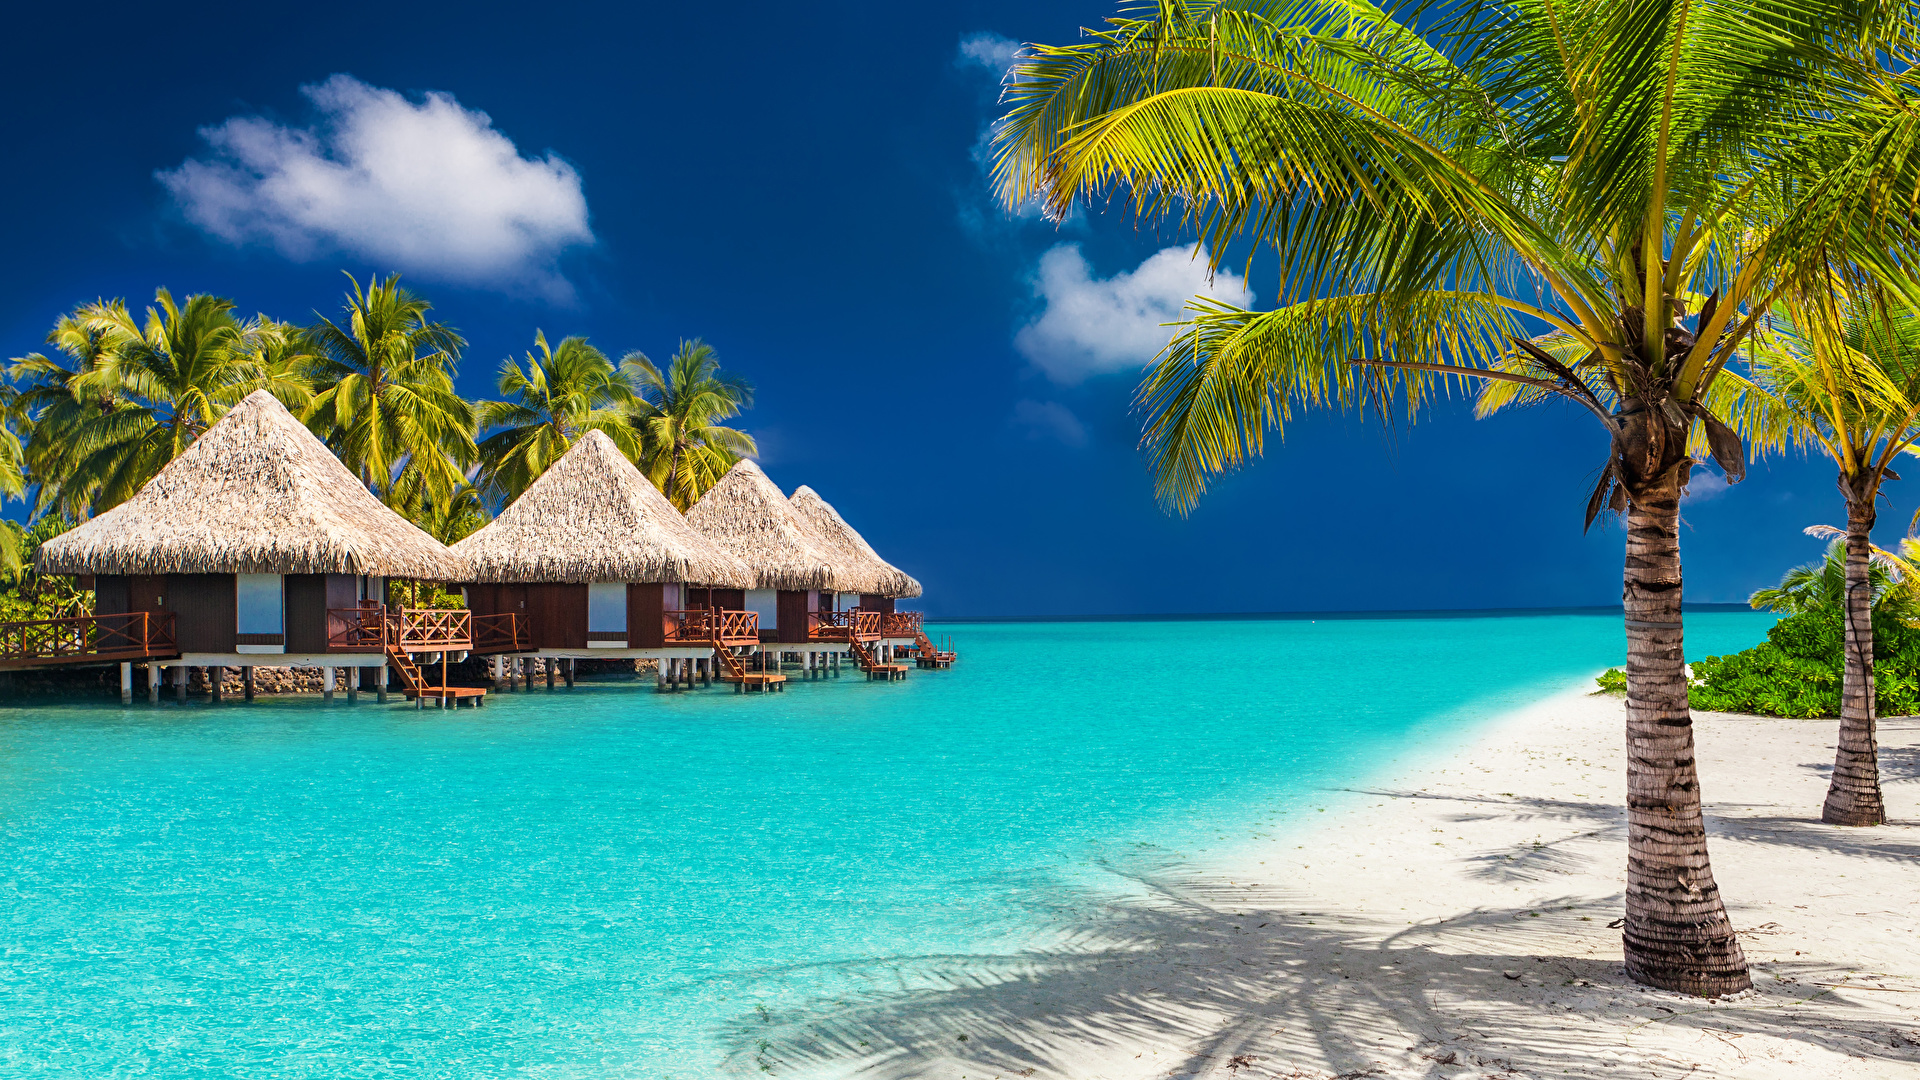 Wallpaper ID: 39550 / Maldives, 4K, 4k wallpaper, holidays, vacation,  travel, hotel, island, ocean, bungalow, beach, sky free download